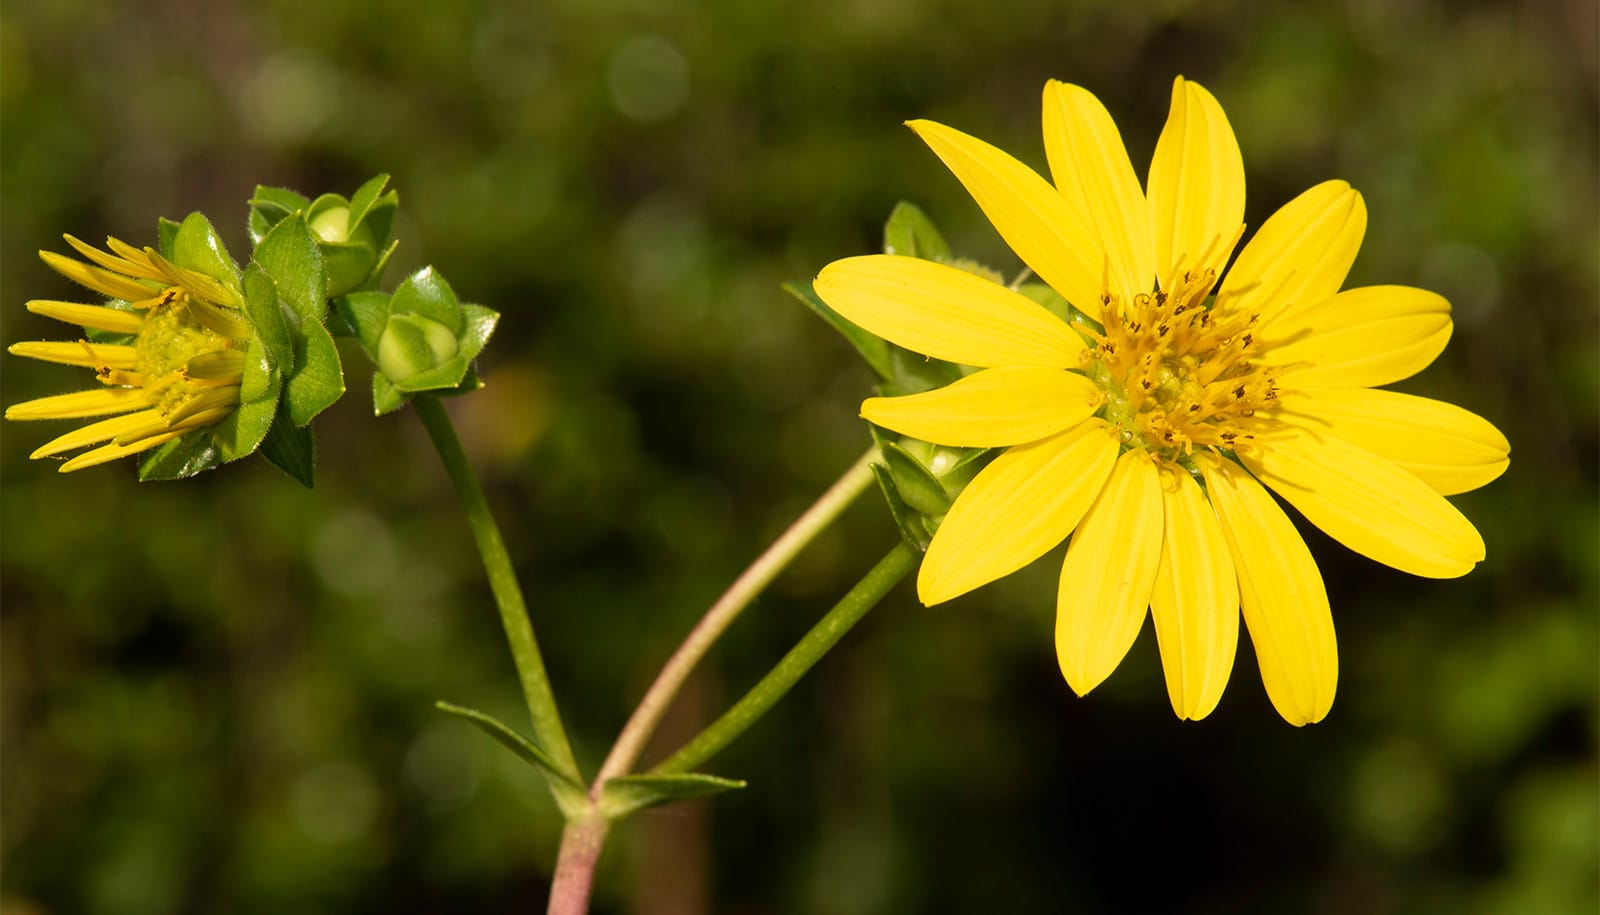 A yellow flower.